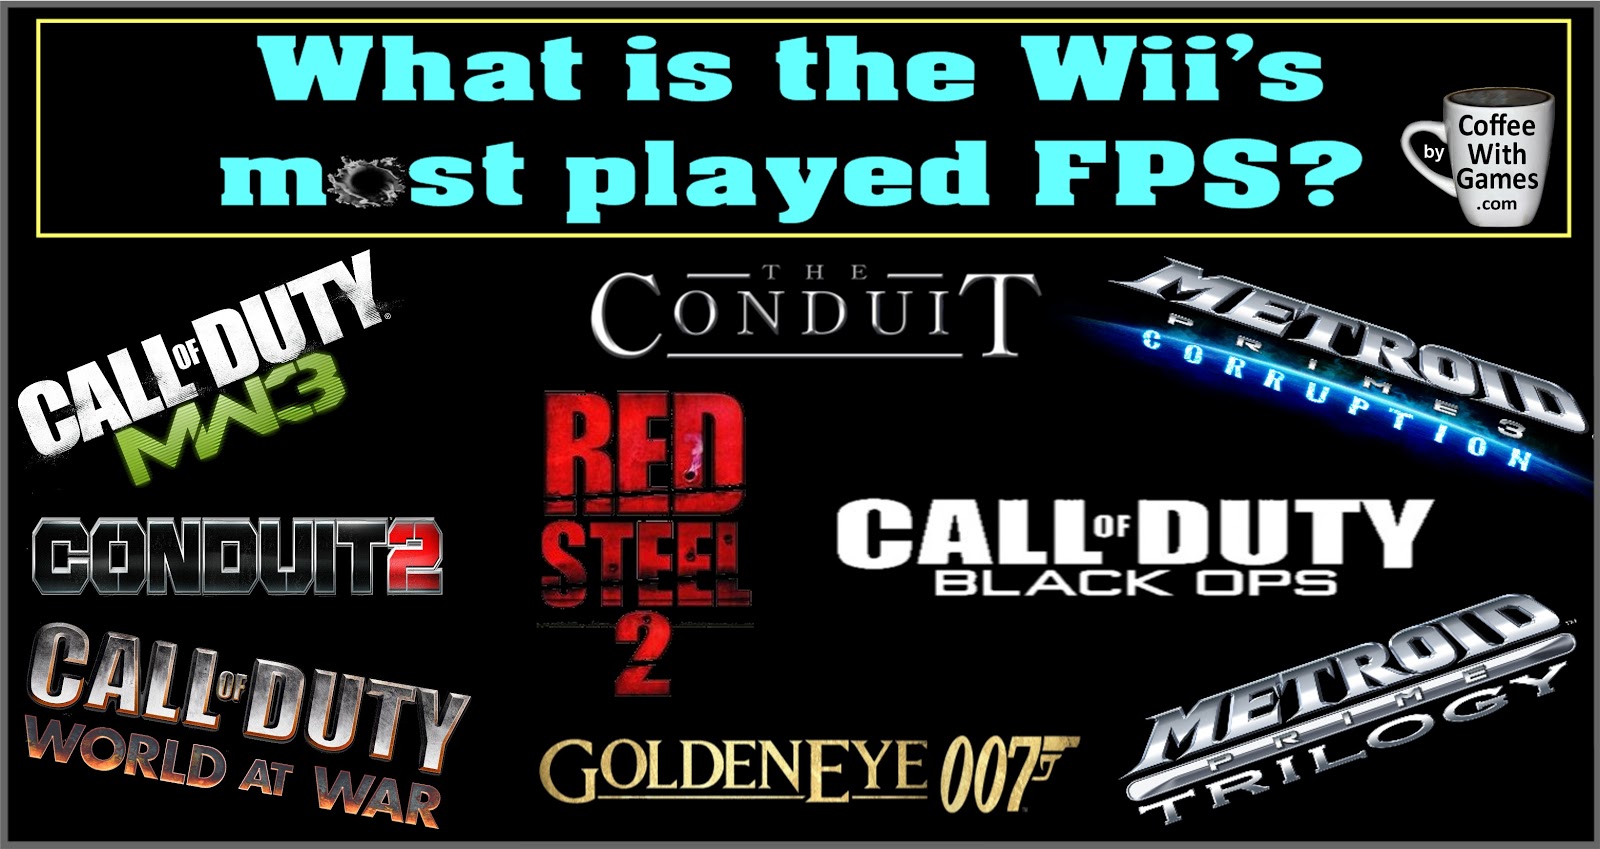 GoldenEye 007 Wii - Multiplayer Trailer - Gamescom '10 